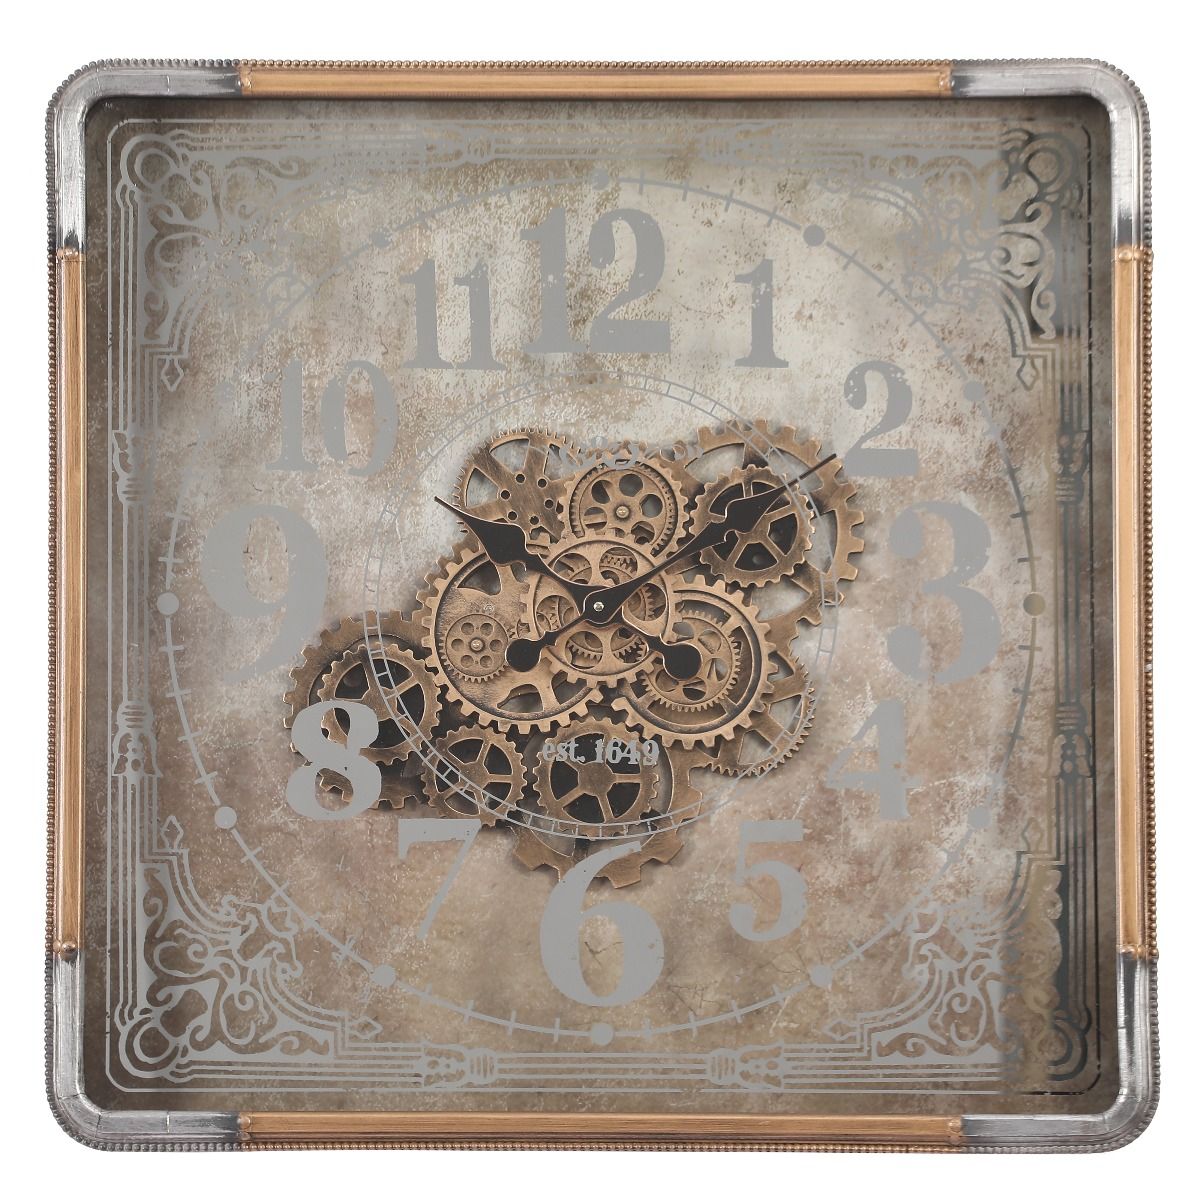 Industrial/vintage-inspired clock range - MODEL 031